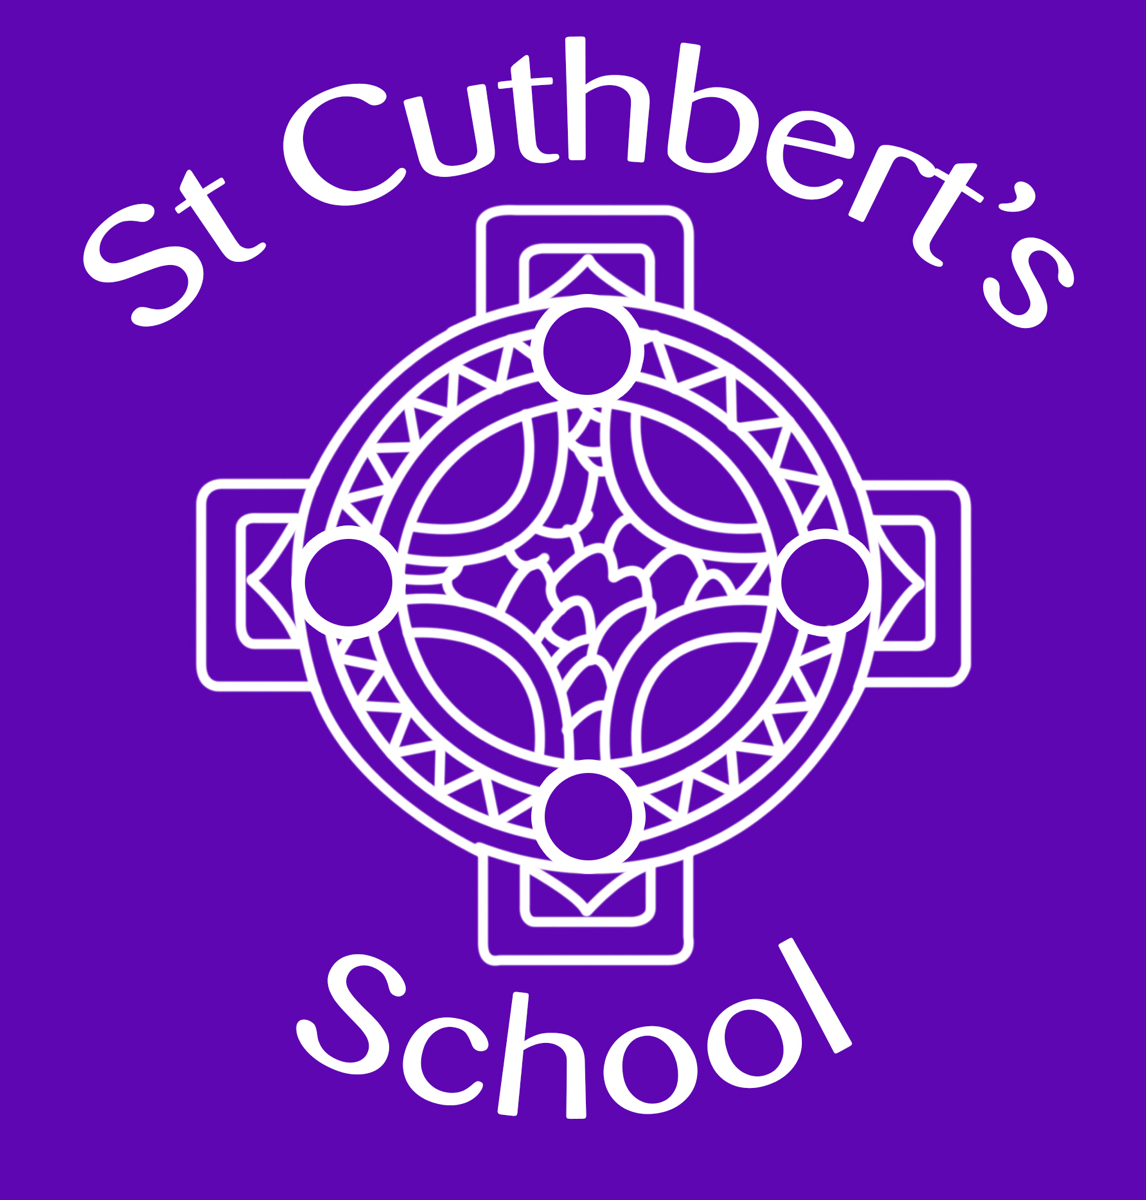 Saint Cuthberts school 